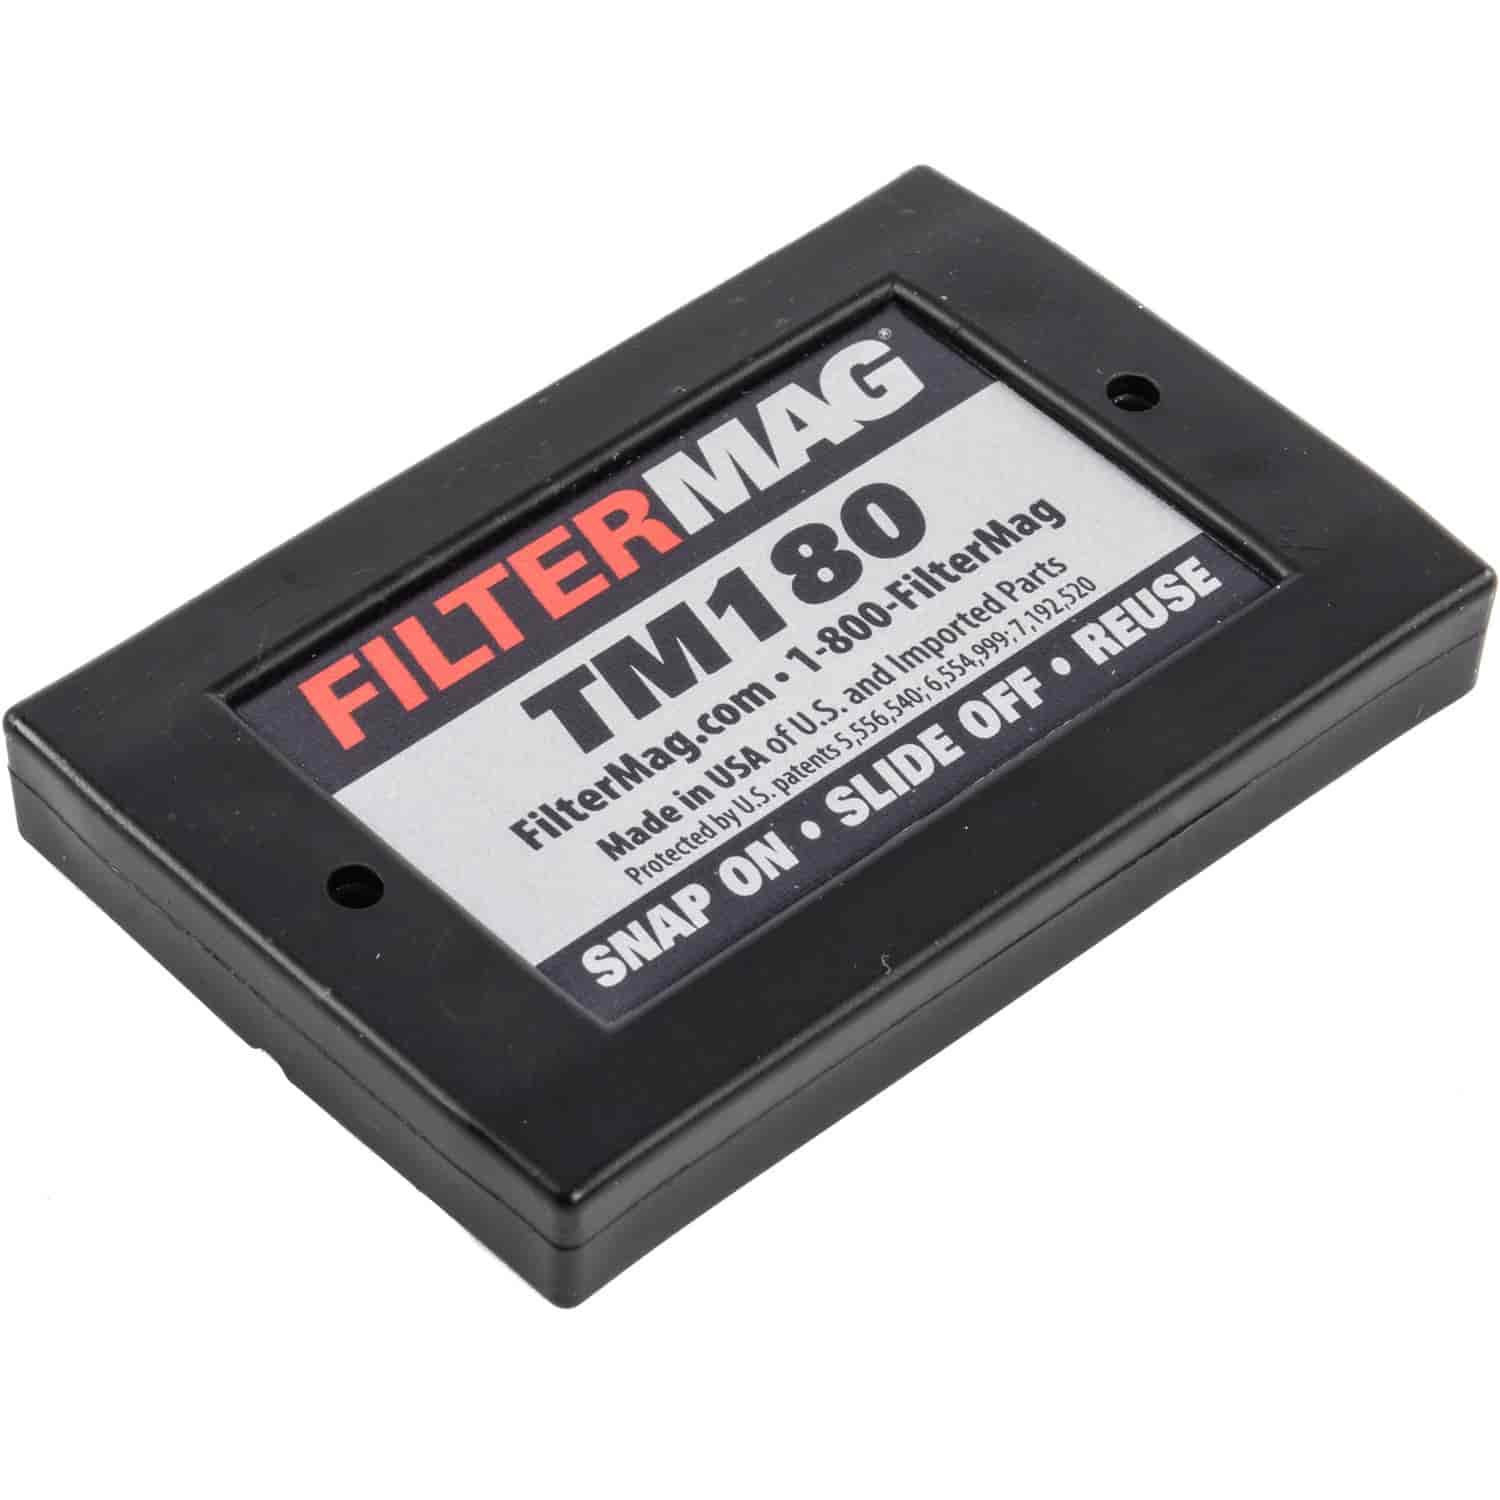 Transmission FilterMag 2.90" x 1.90"